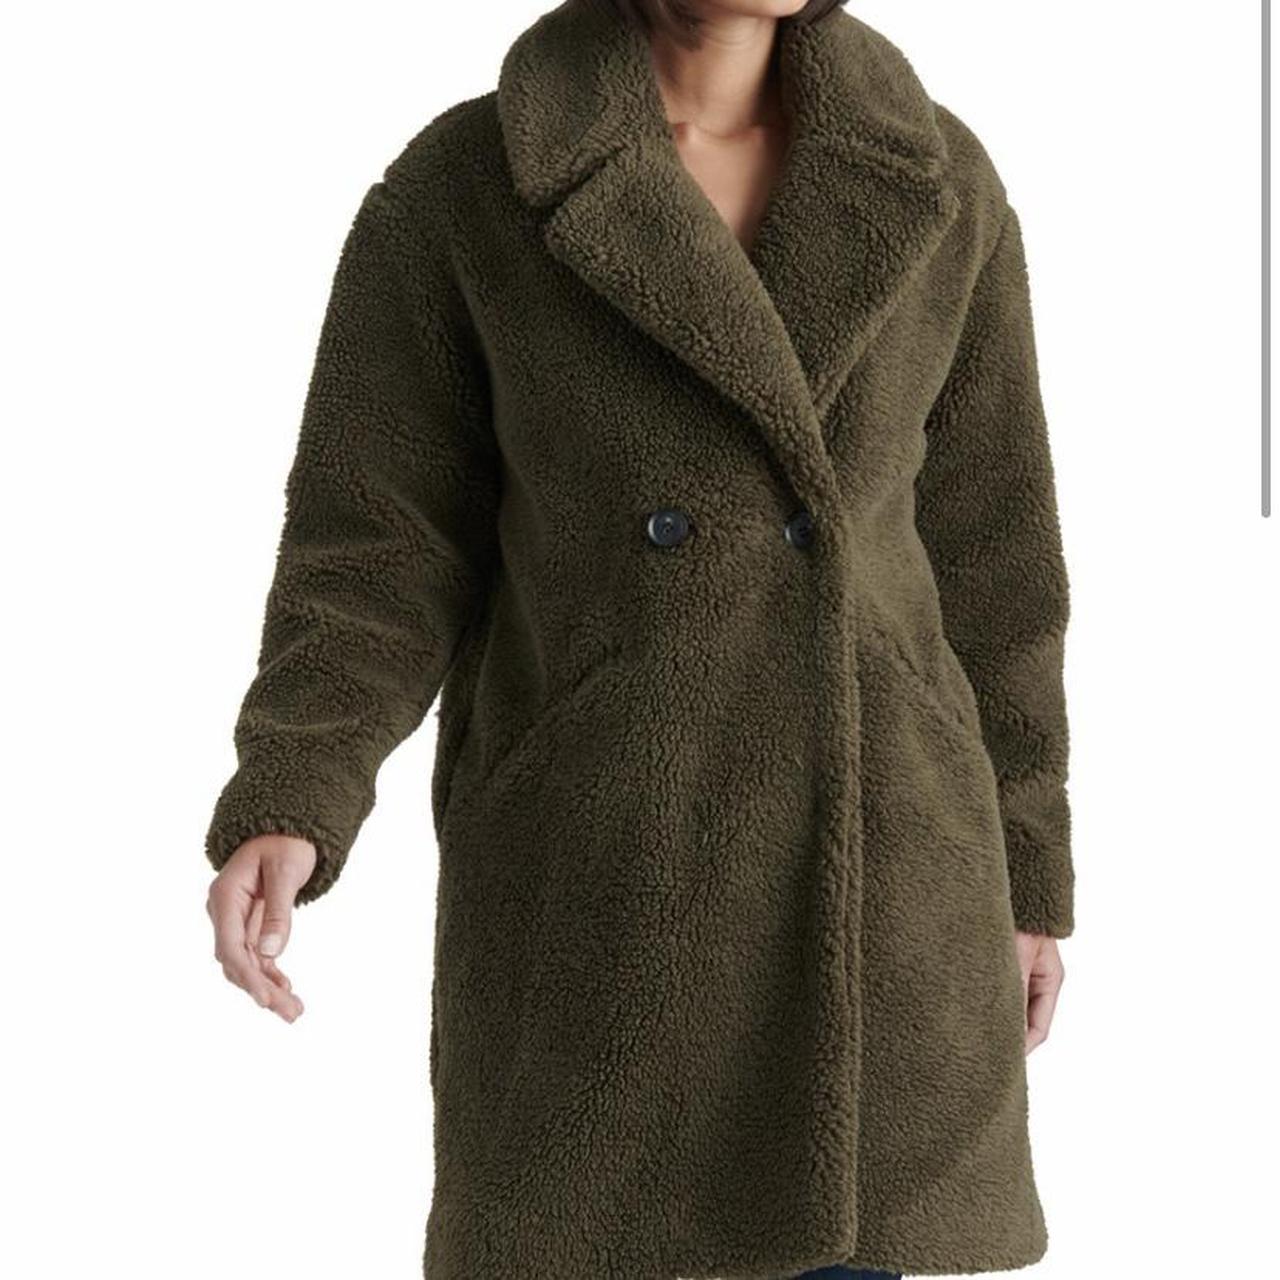 Olive Teddy Coat fur coat fuzzy jacket Brand: Lucky - Depop